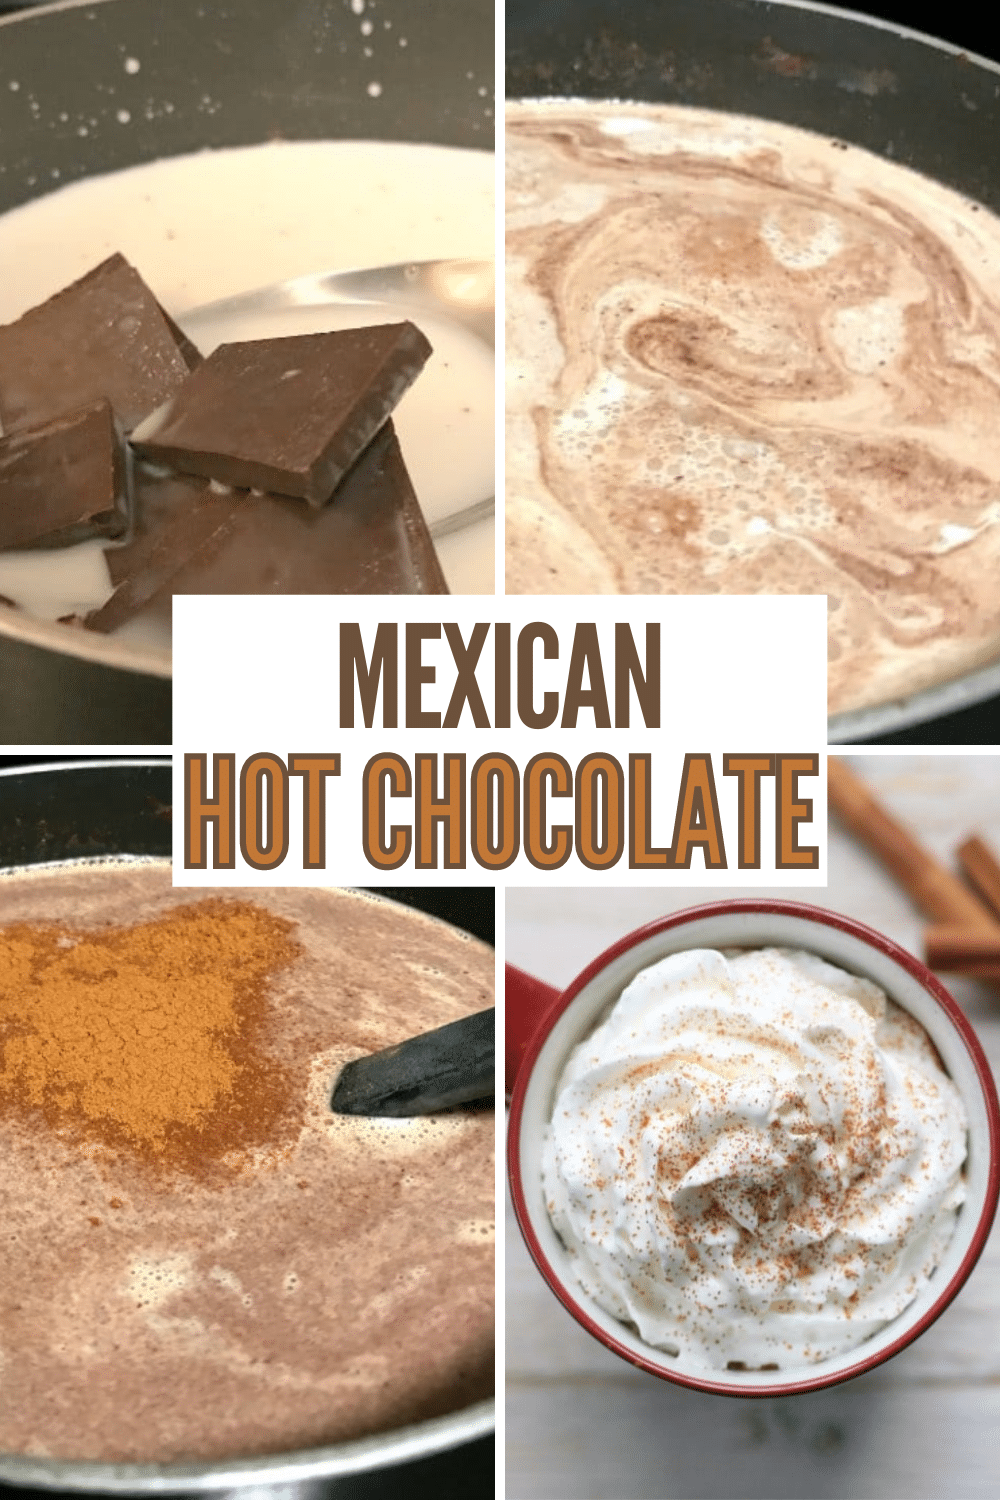 Mexican Hot Chocolate is even tastier than traditional hot chocolate. Creamy, chocolatey and full of flavor! #hotchocolate #chocolatelovers via @wondermomwannab